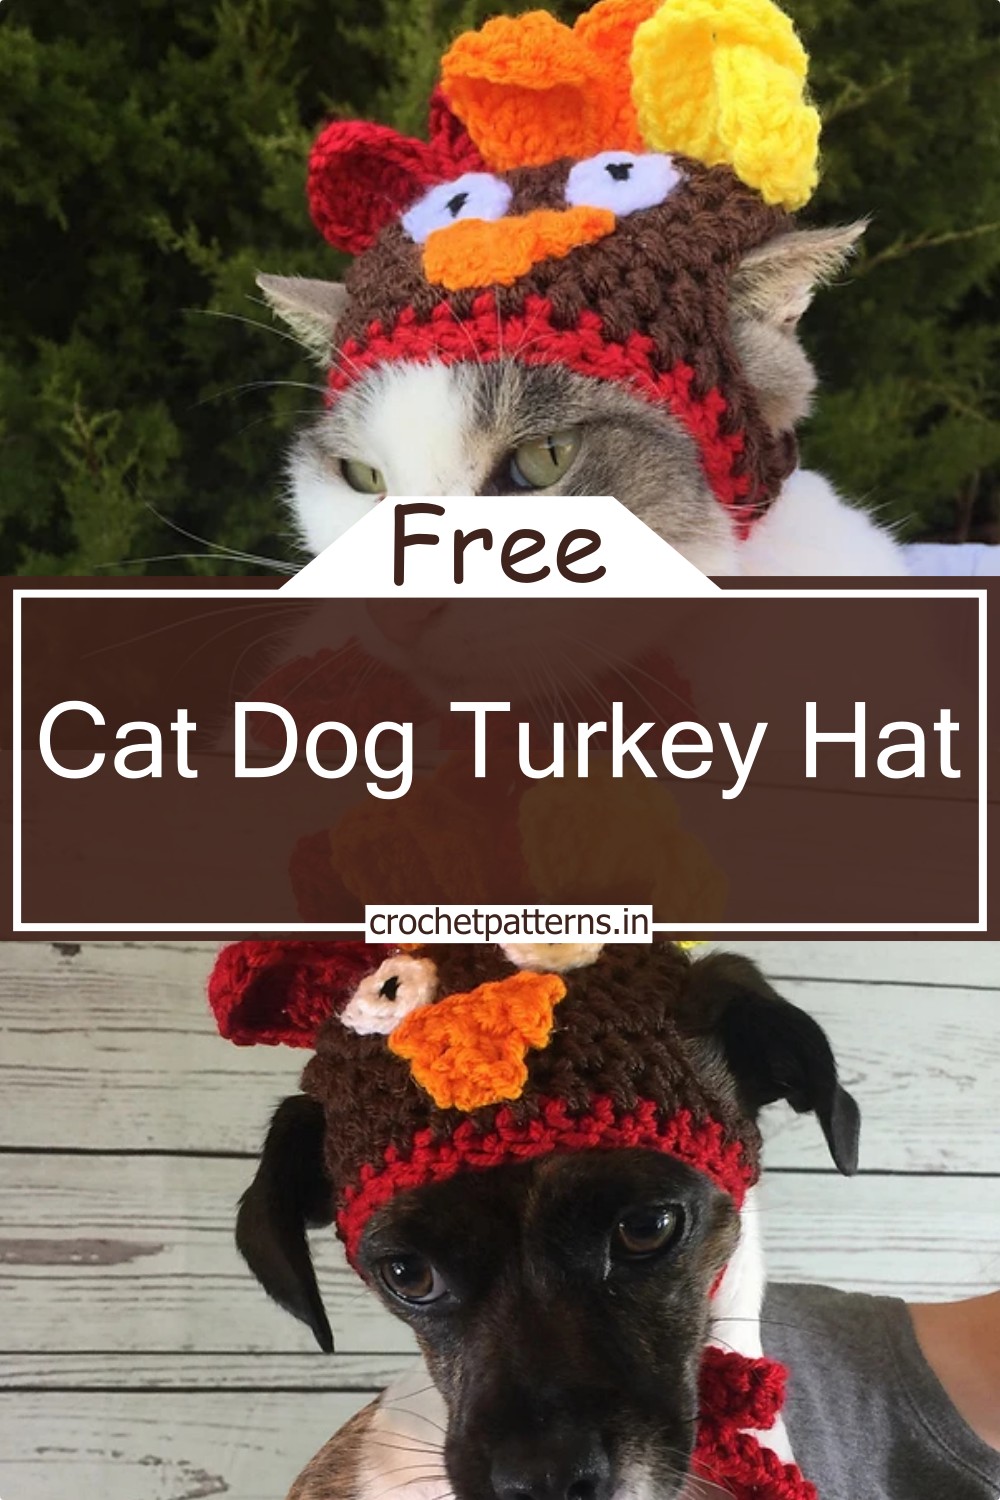 Cat - Dog Turkey Hat